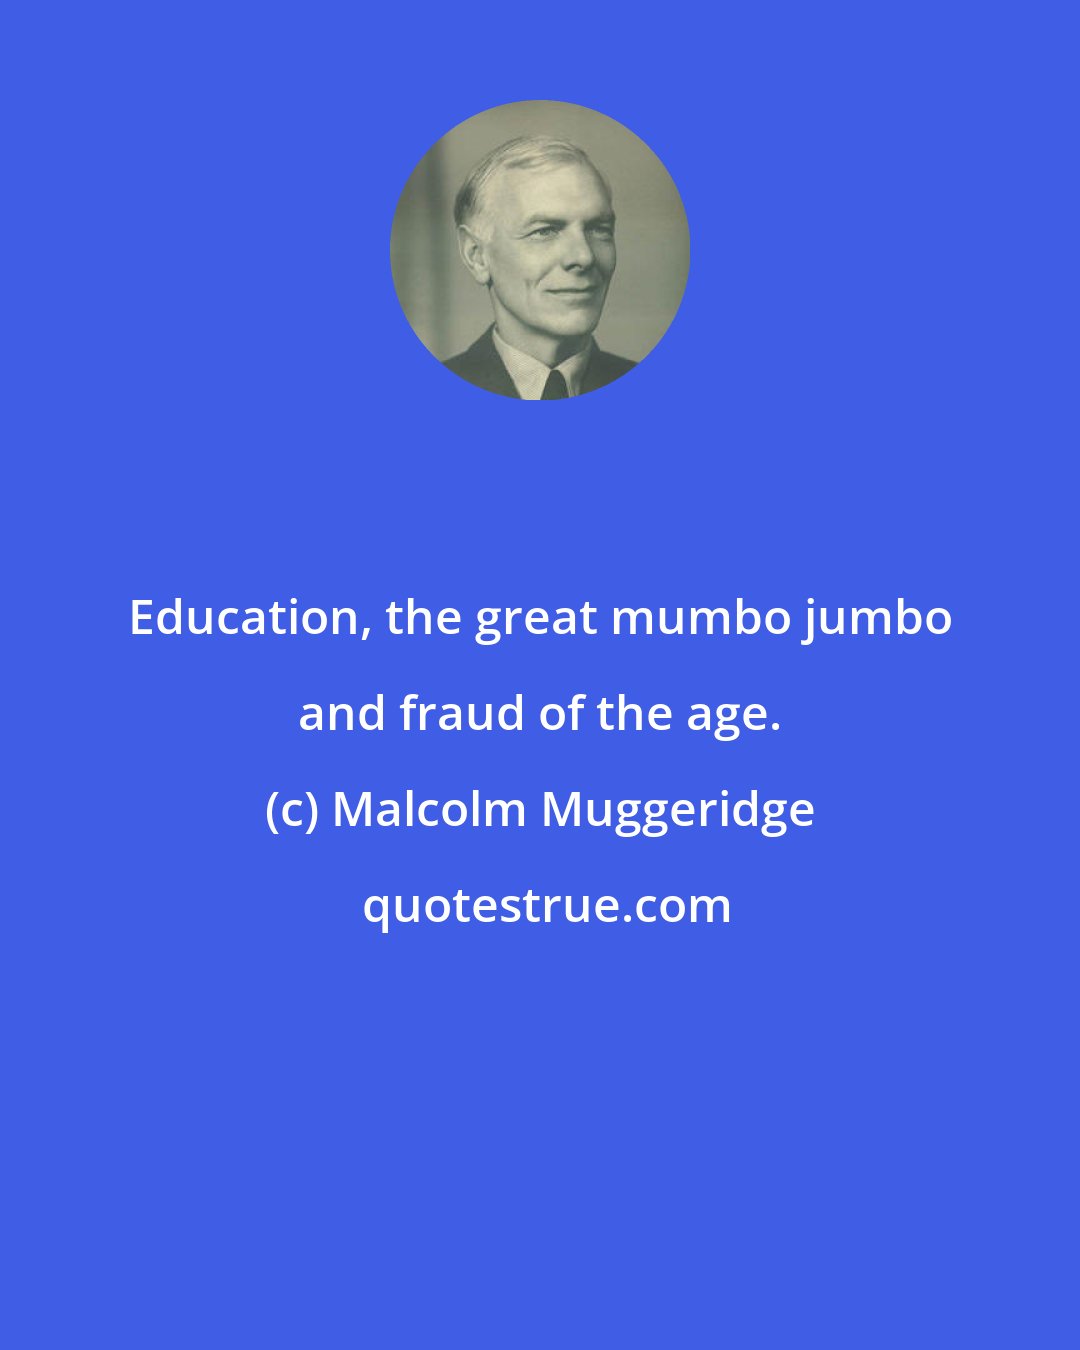 Malcolm Muggeridge: Education, the great mumbo jumbo and fraud of the age.